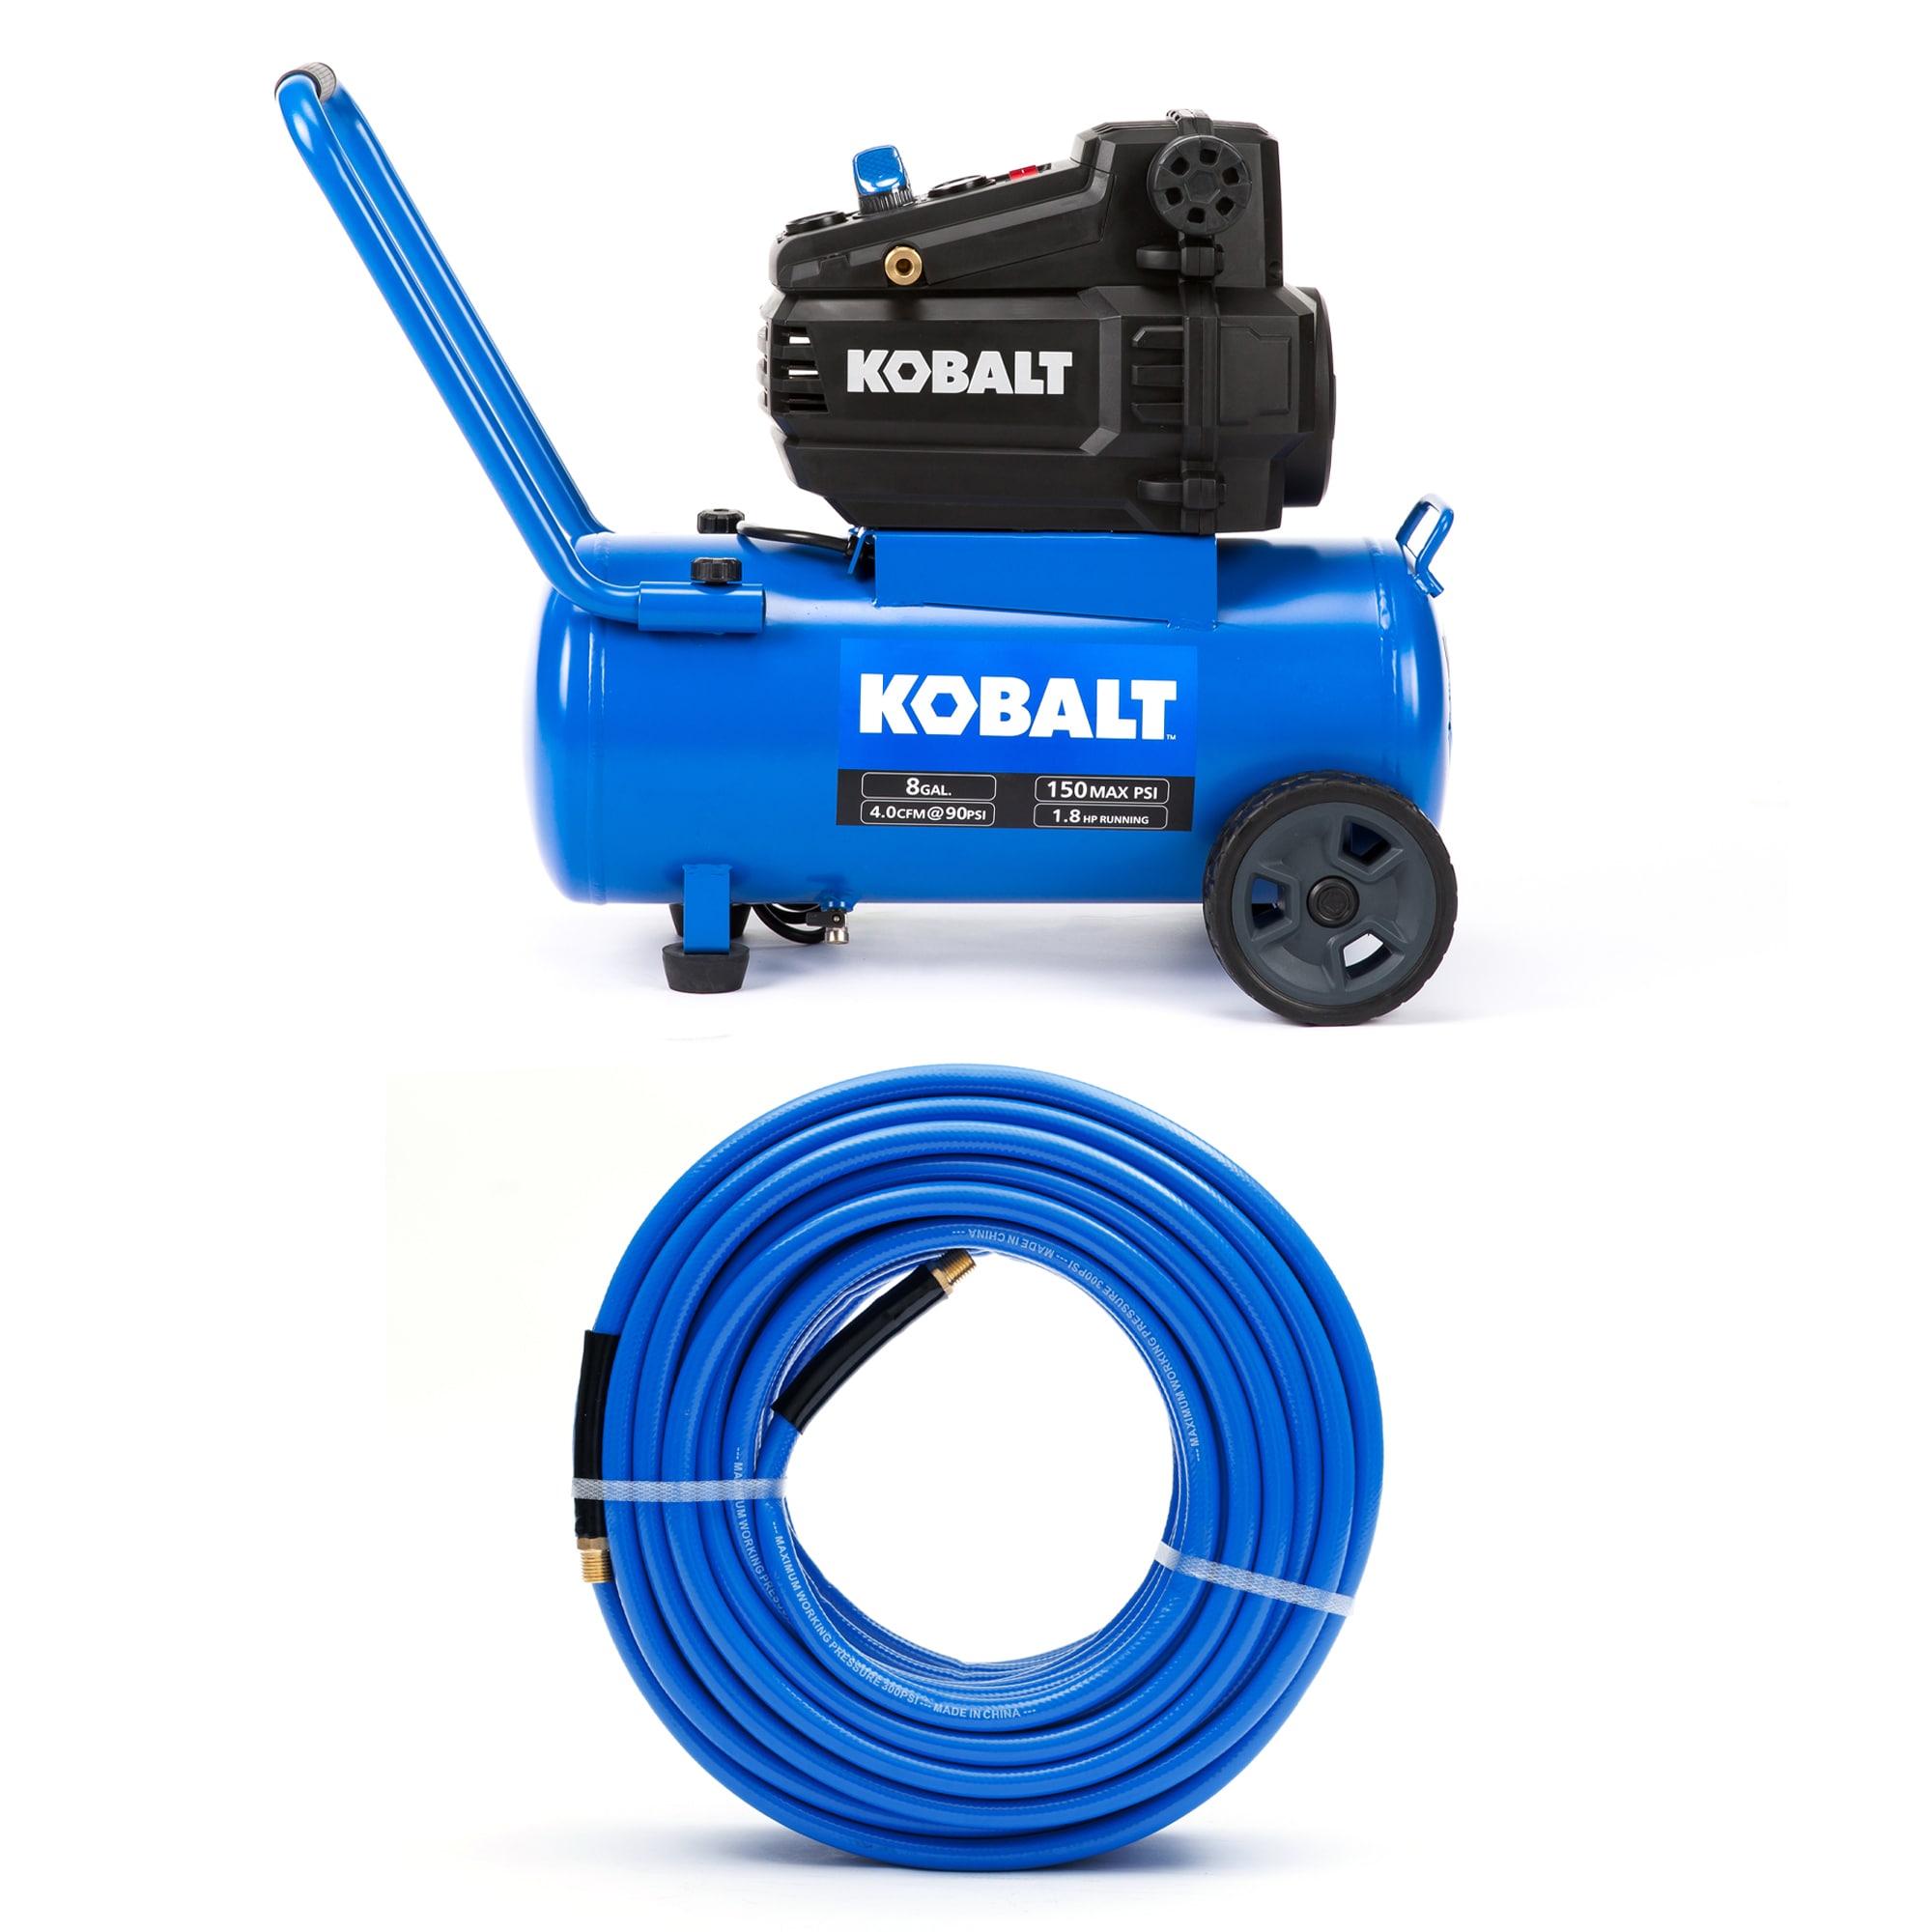 Kobalt Kobalt 3/8-in x 50-Ft PVC Air Hose in the Air Compressor